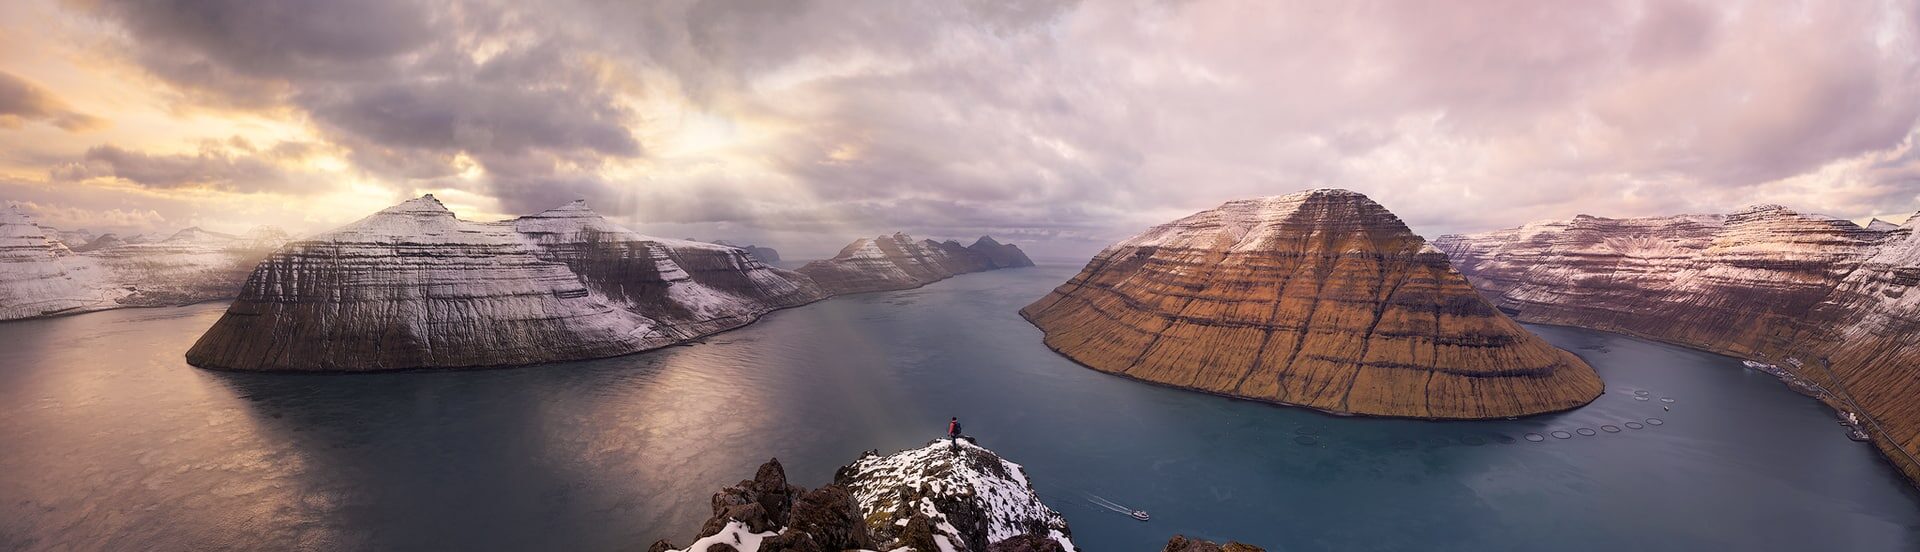 Faroe Islands grand vistas, photo workshop